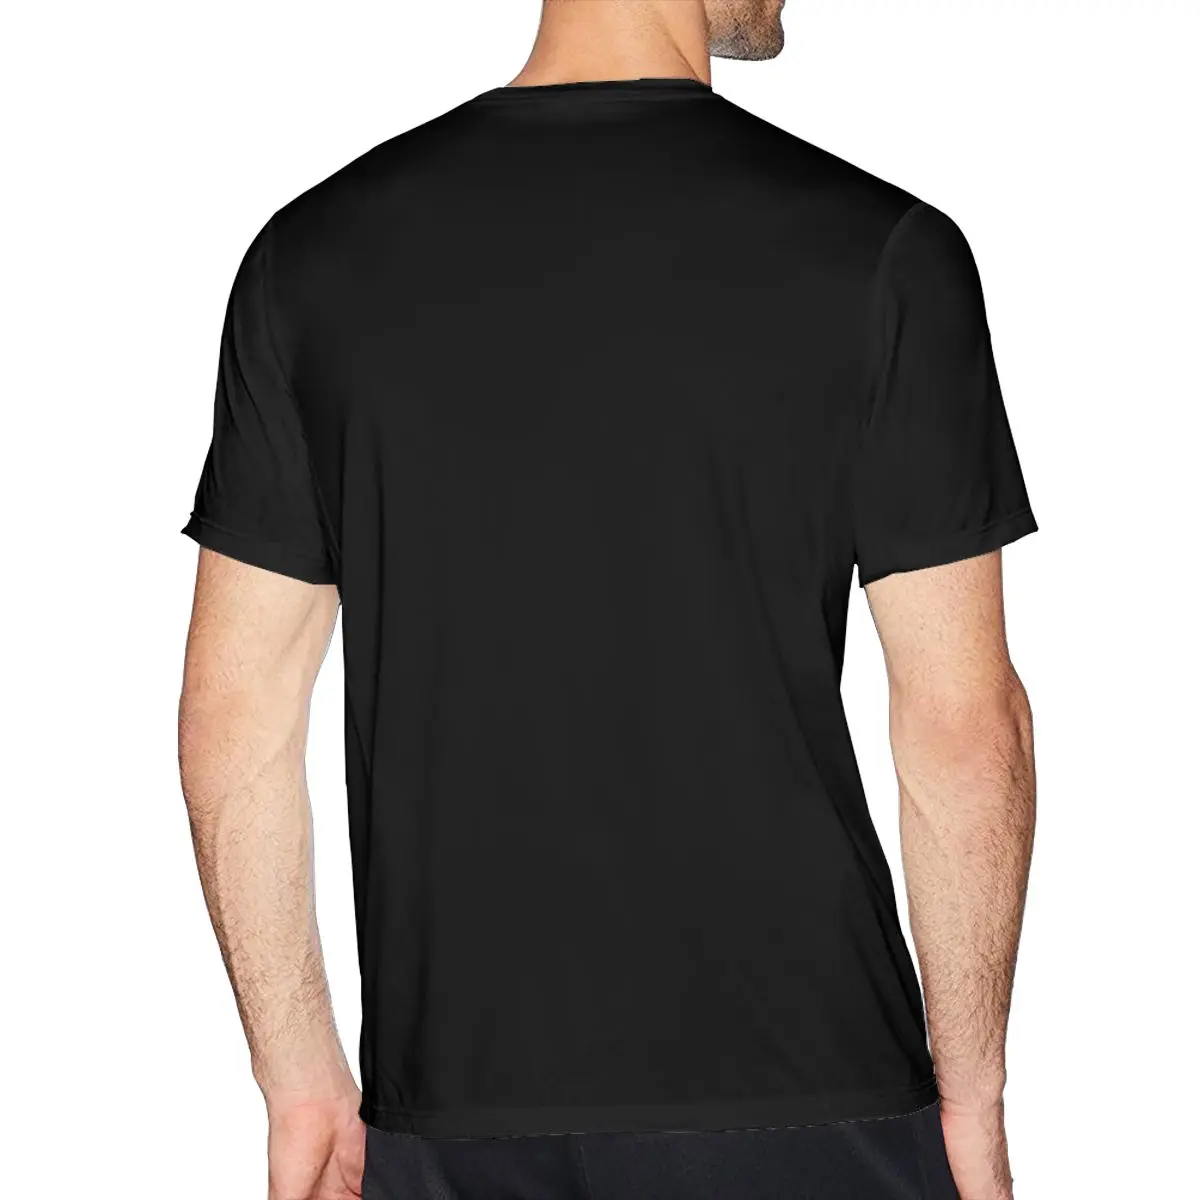 Tree Of Life T-Shirt Følg Mig Til Adventure T-Shirt Streetwear Mand Tee Shirt Sjove Print Plus size t-shirt